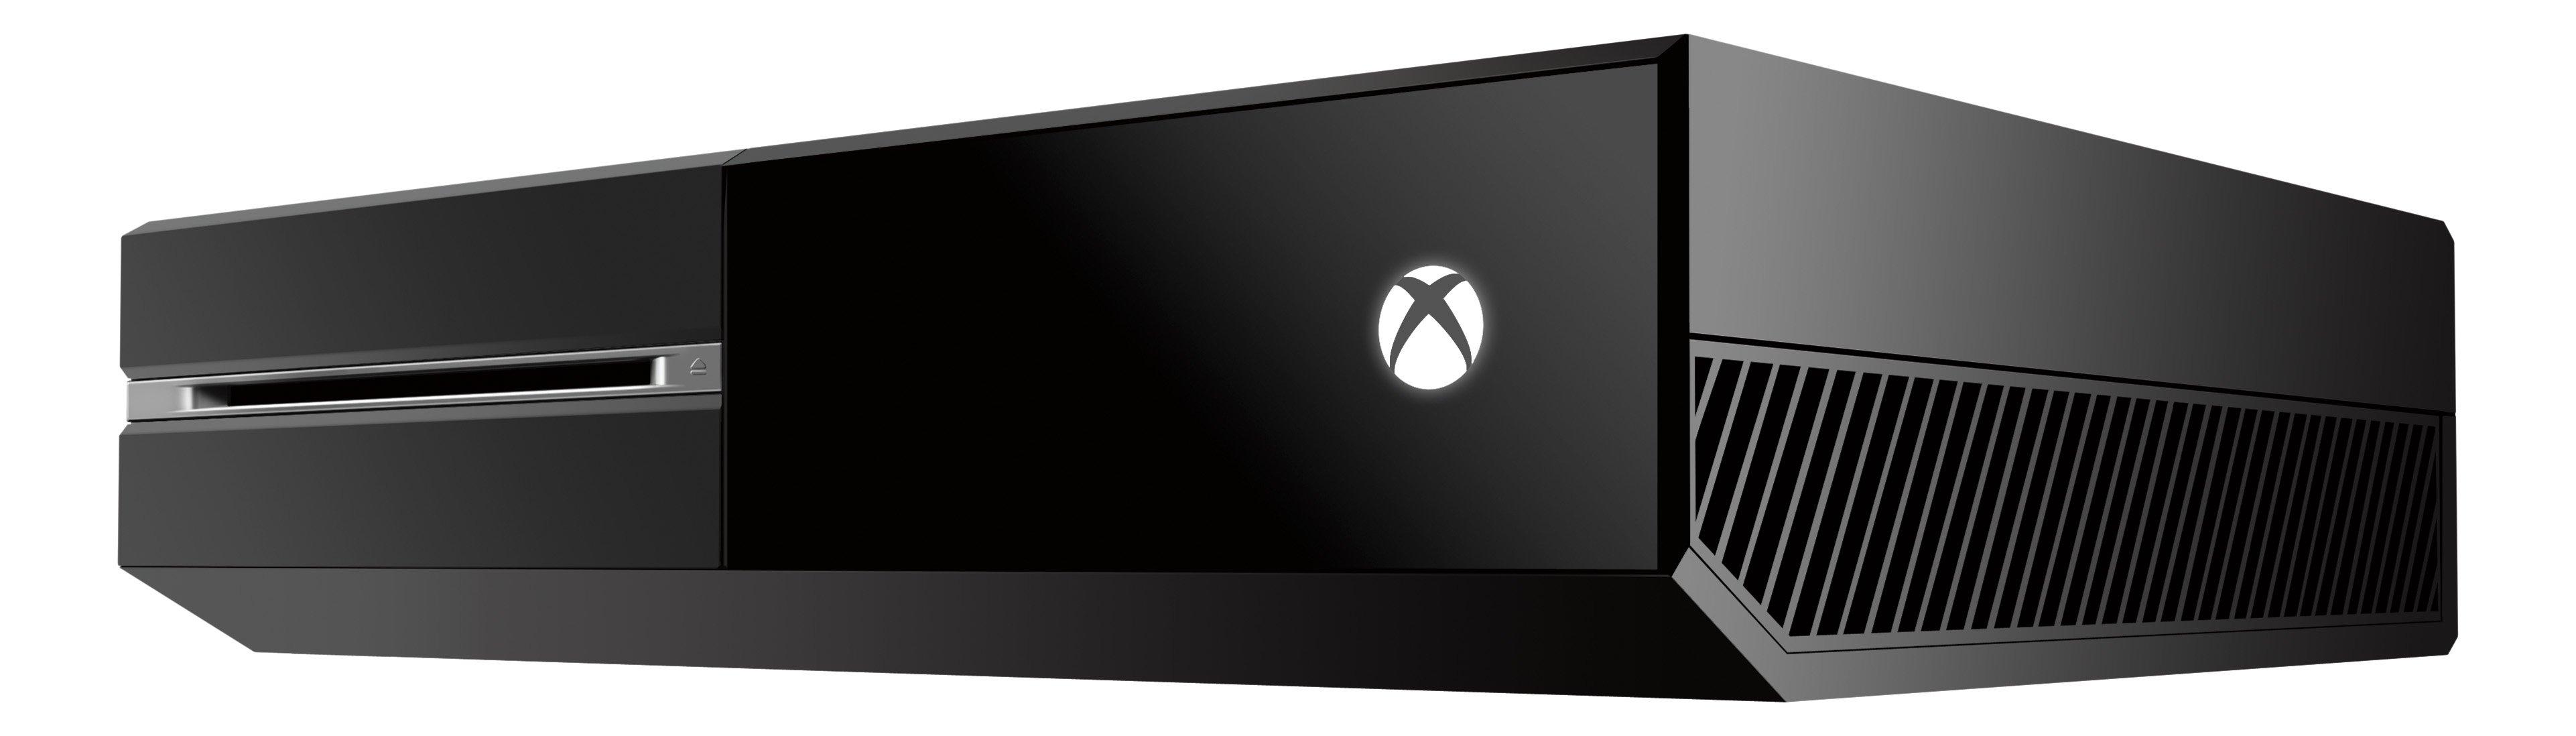 list item 2 of 7 Microsoft Xbox One Black 1TB